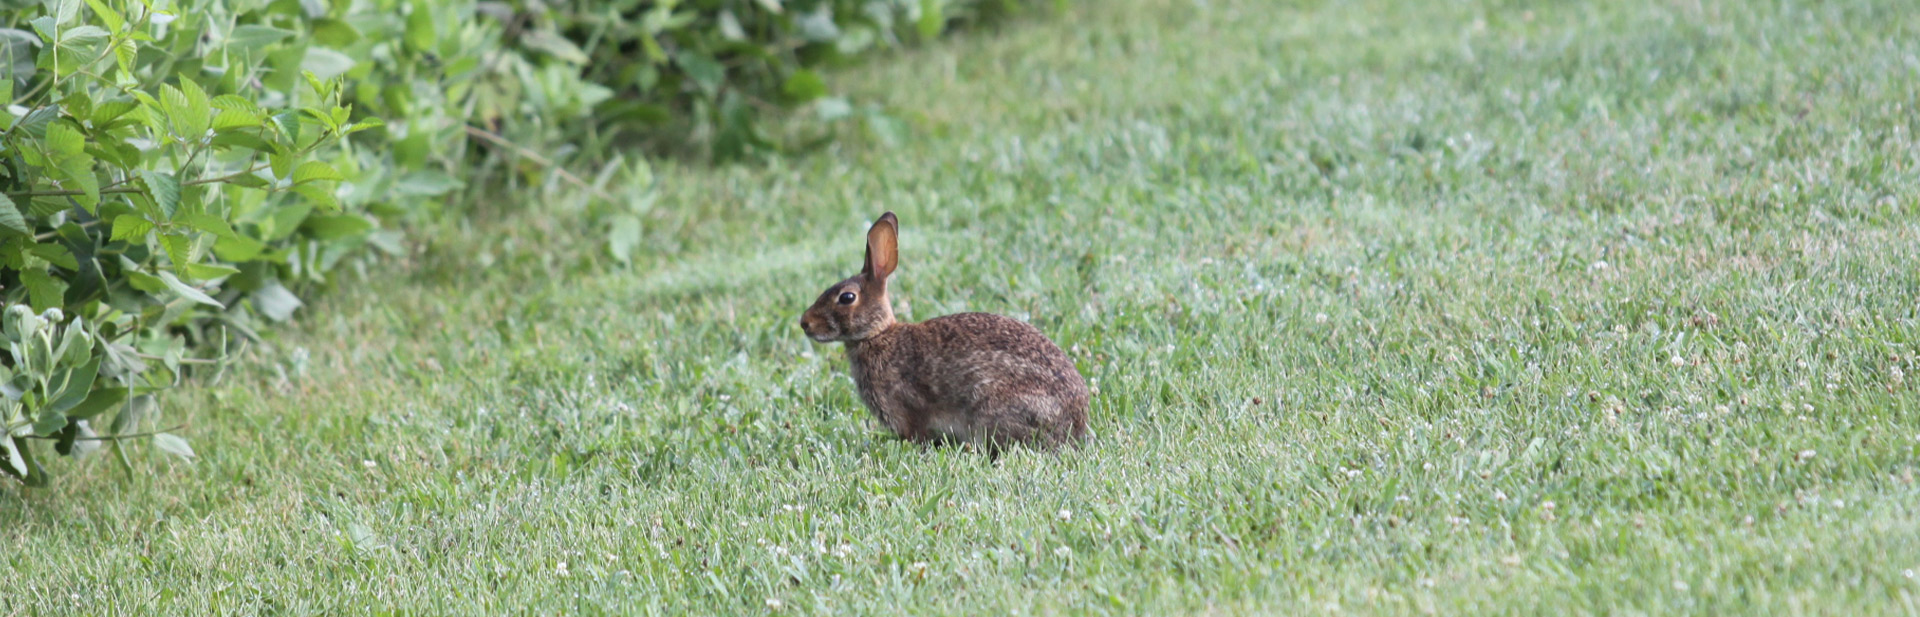 Rabbit in a mowed lawn